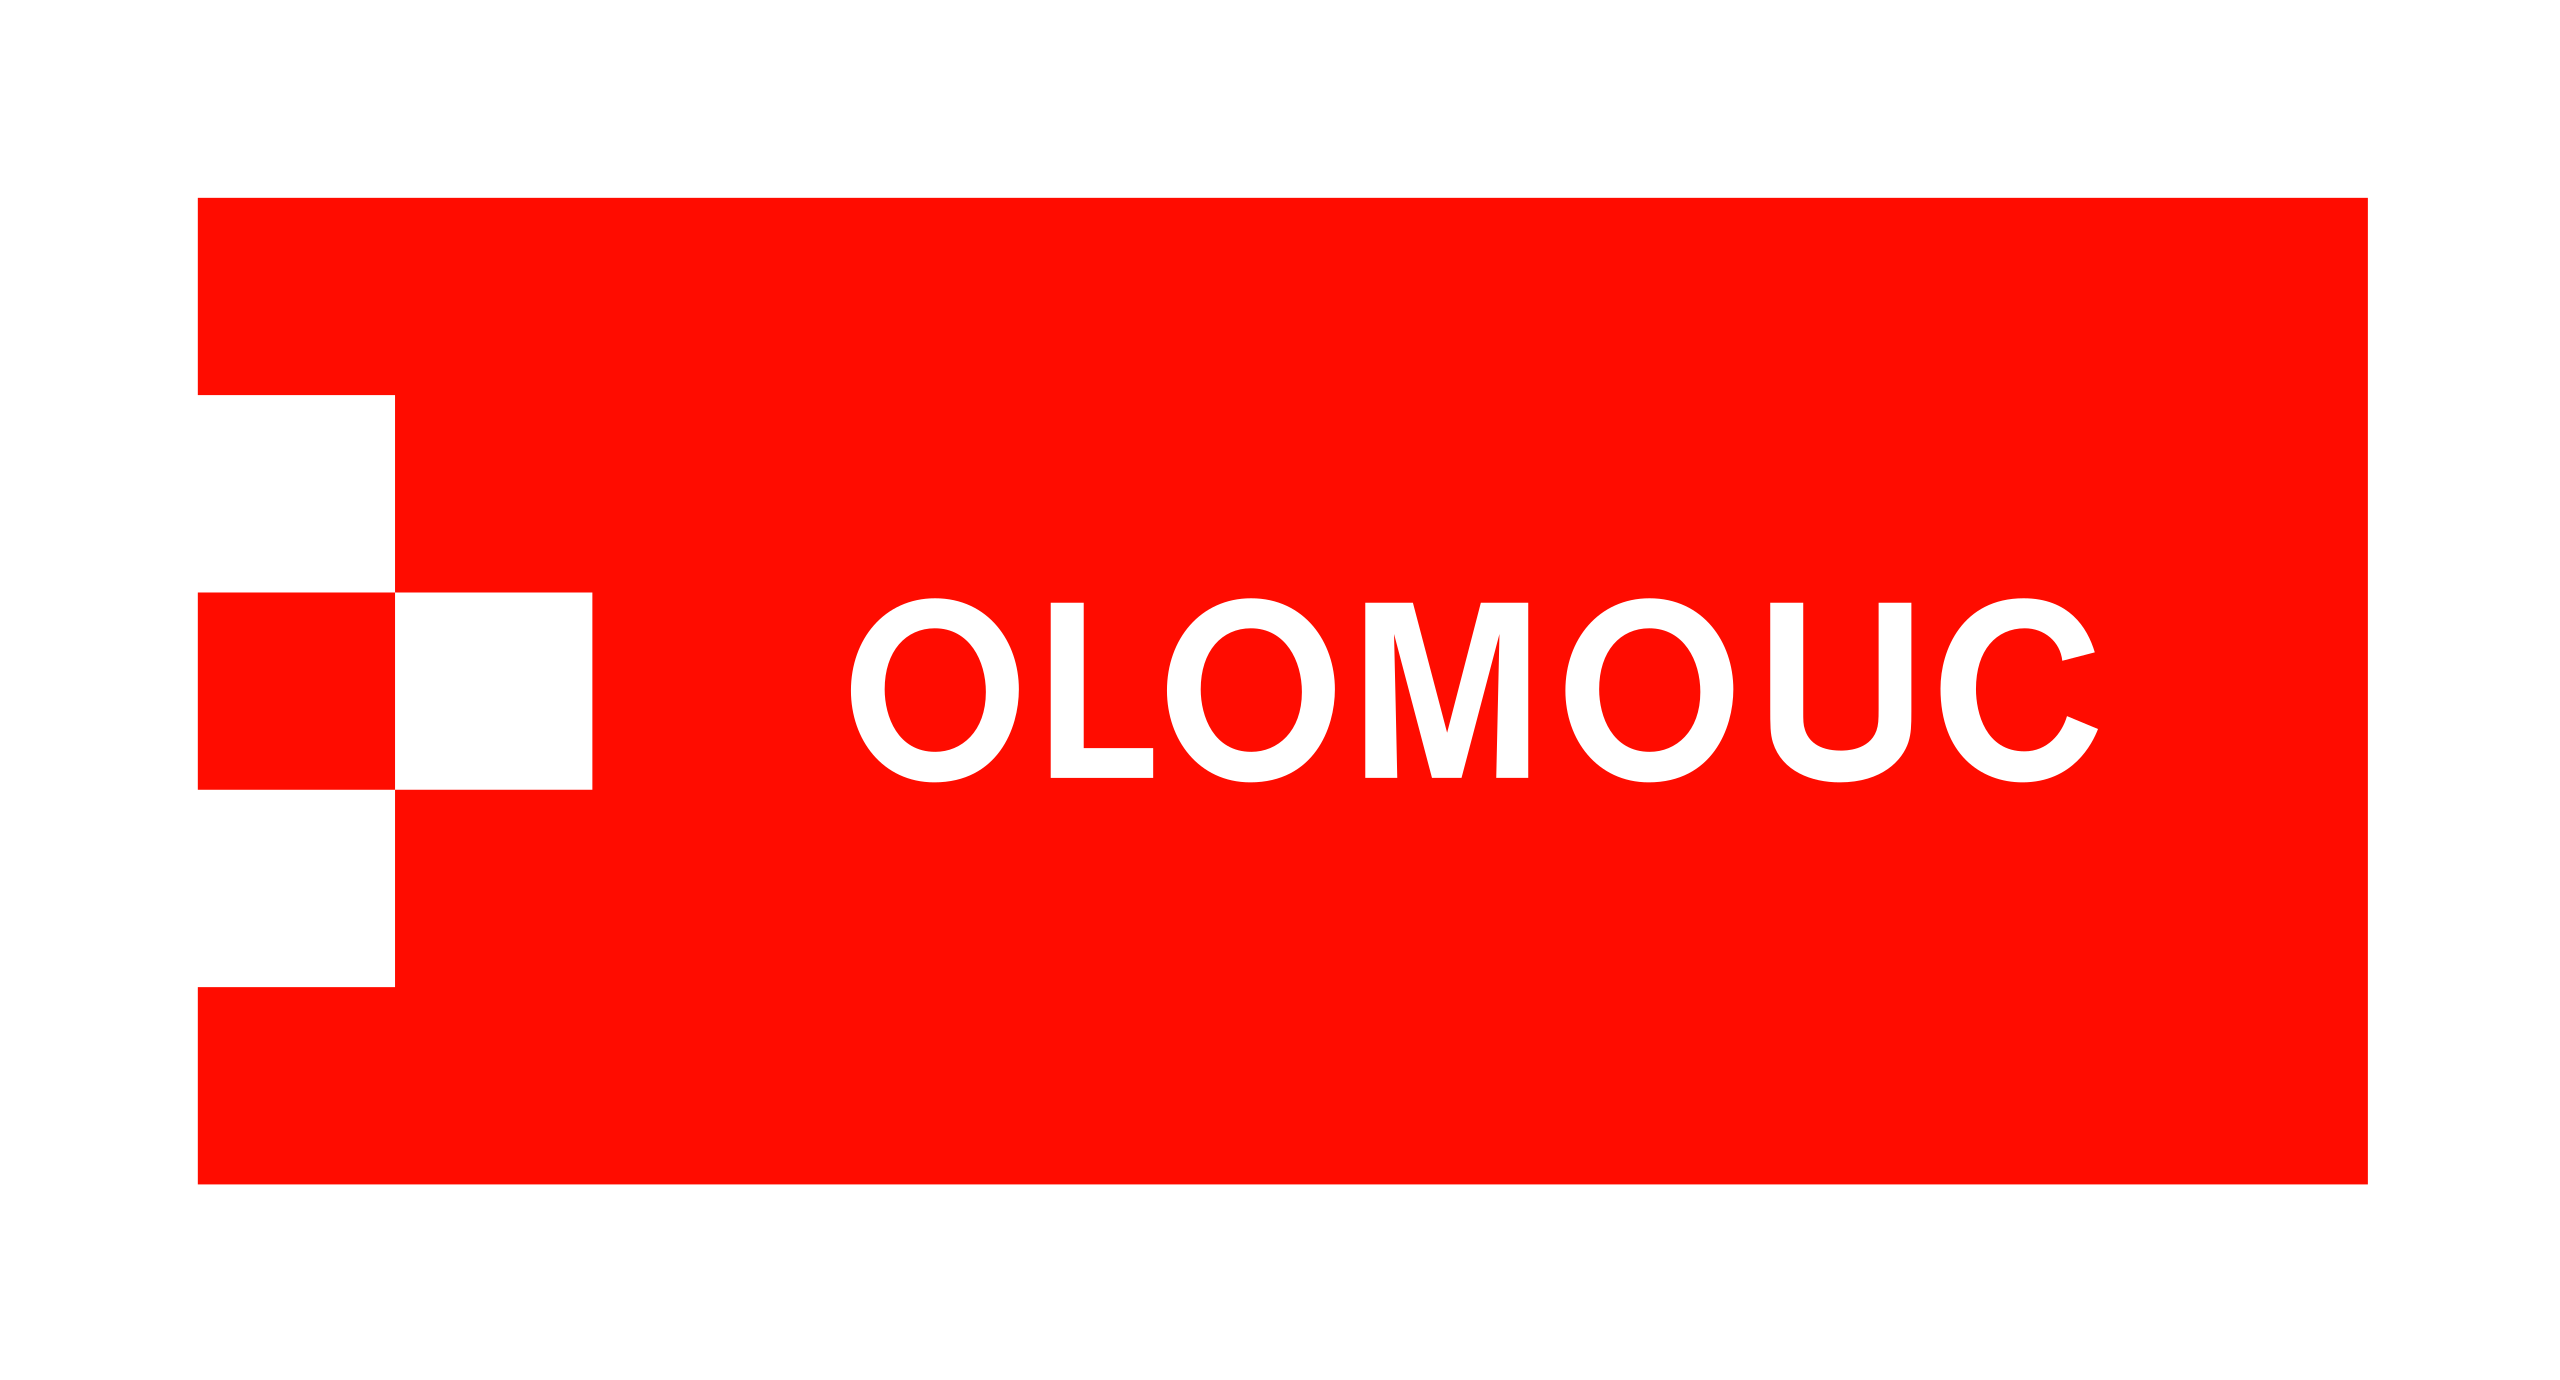 Olomouc logo